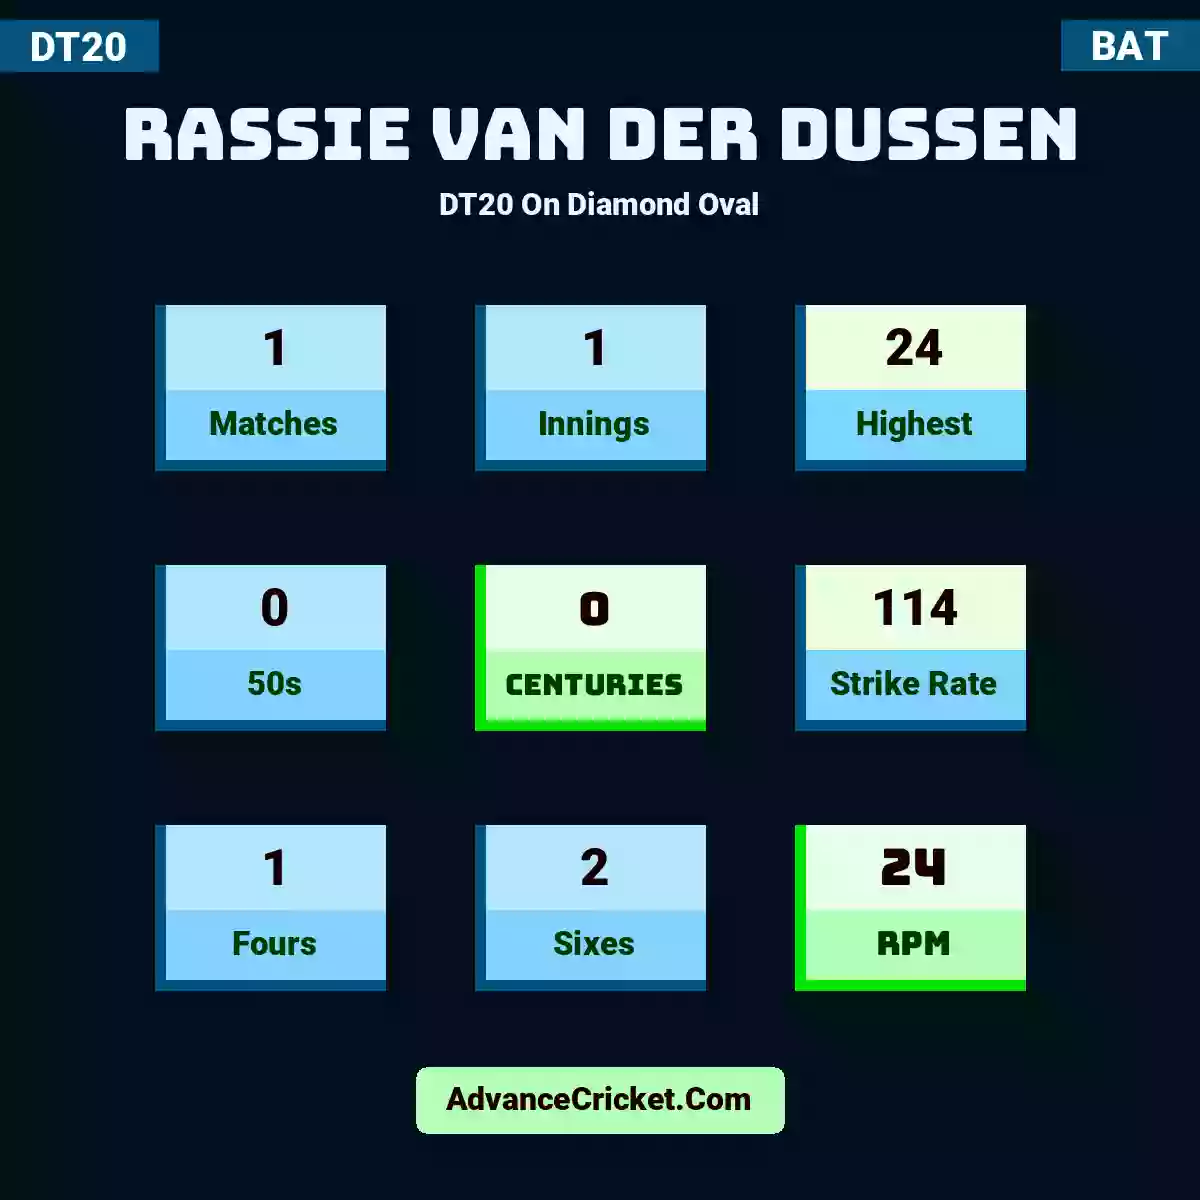 Rassie van der Dussen DT20  On Diamond Oval, Rassie van der Dussen played 1 matches, scored 24 runs as highest, 0 half-centuries, and 0 centuries, with a strike rate of 114. R.Dussen hit 1 fours and 2 sixes, with an RPM of 24.